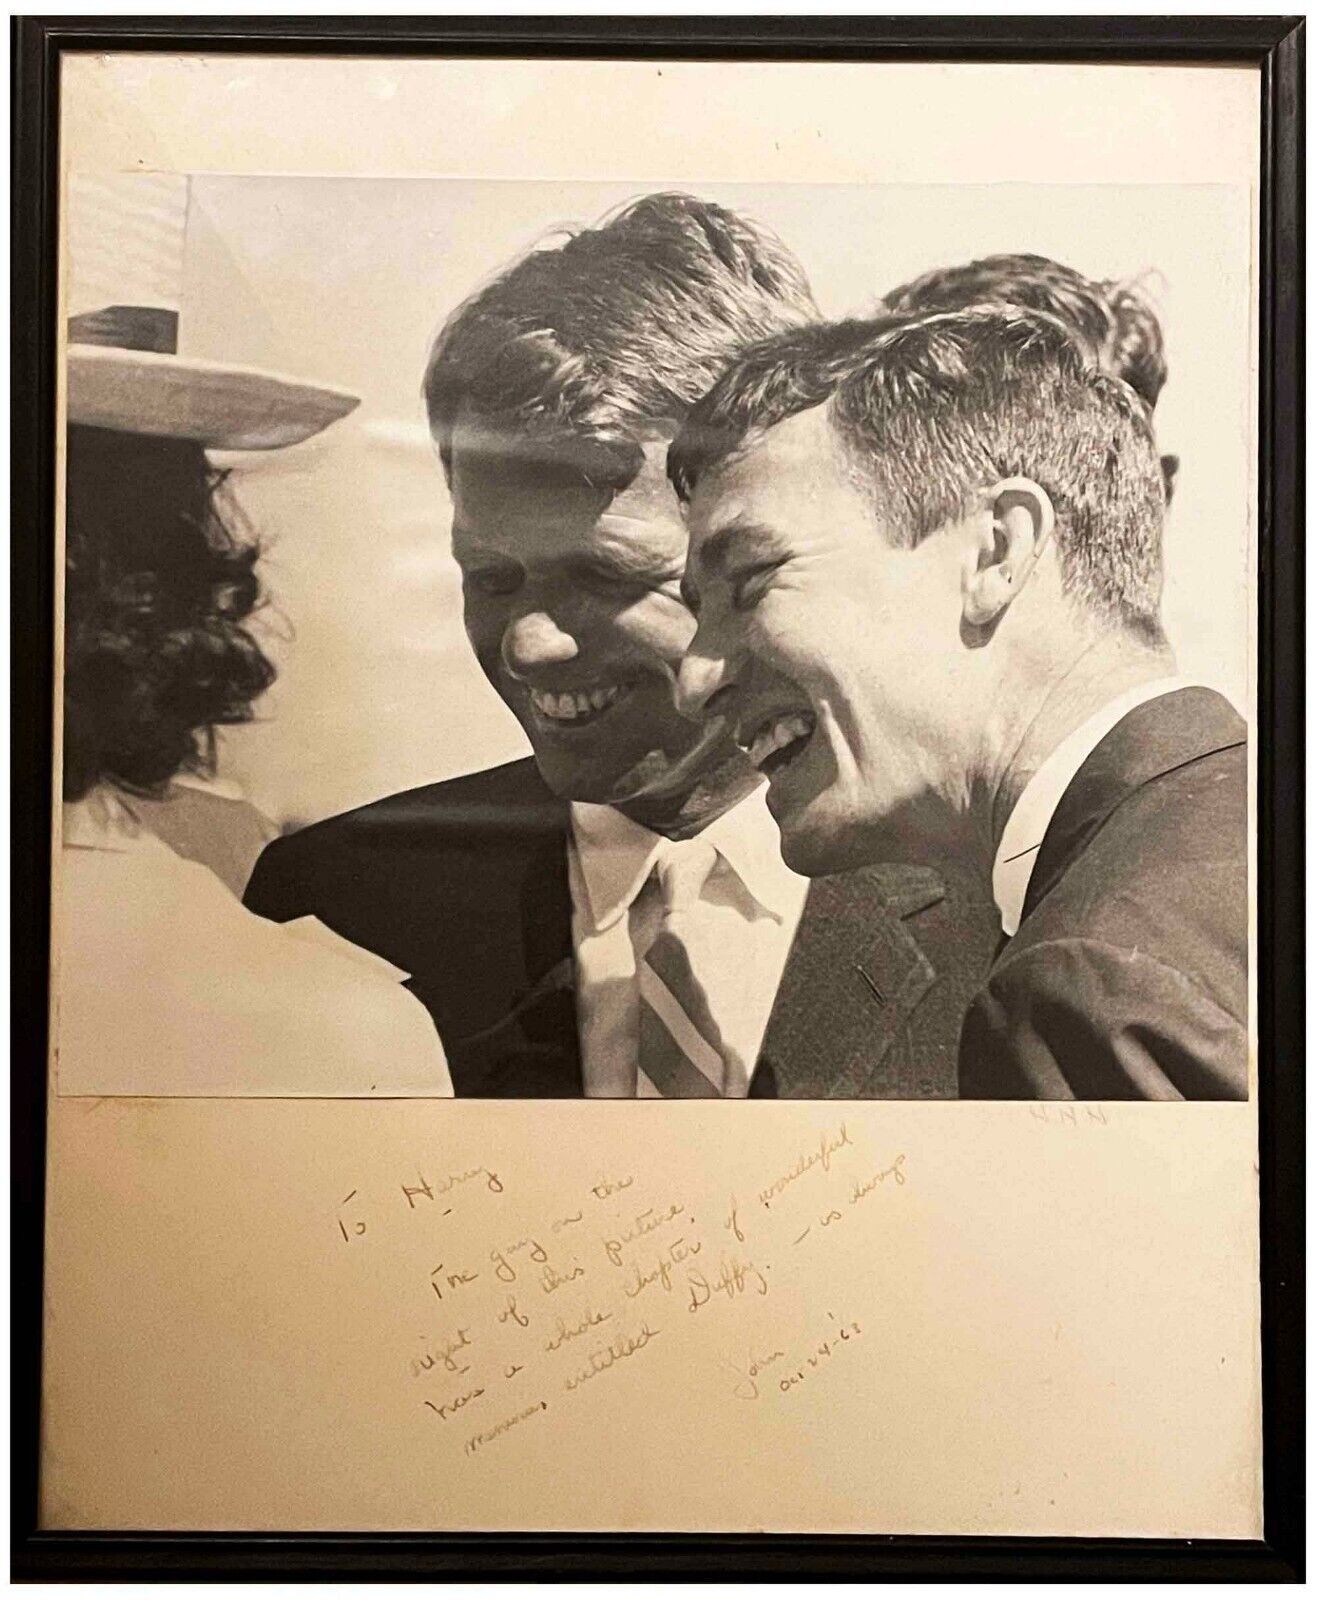 Oct 24 1963 Robert F. Kennedy Photograph Message Harry Stephen Smith